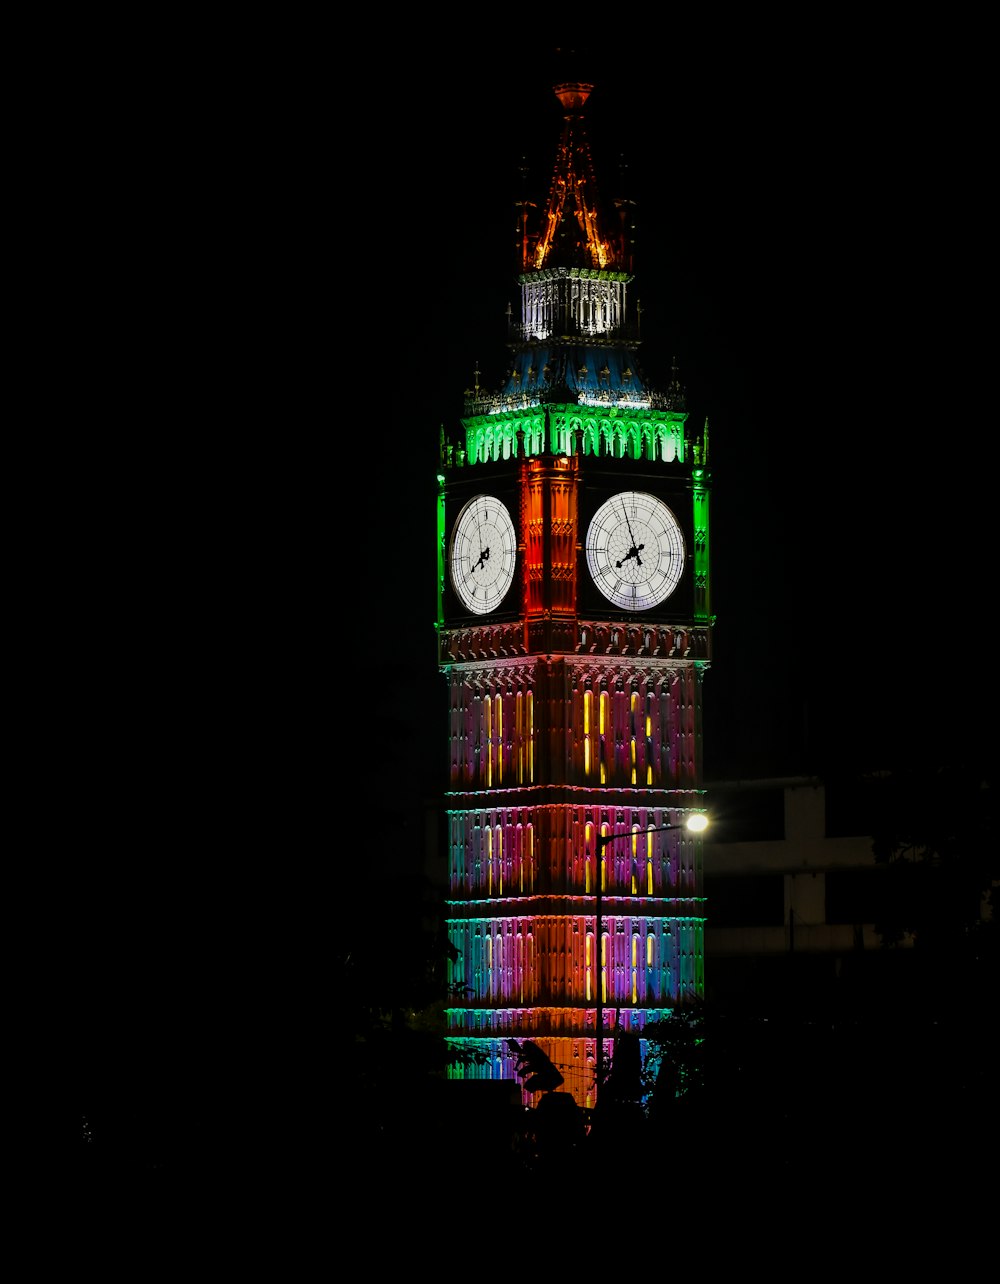 the big ben clock tower lit up at night